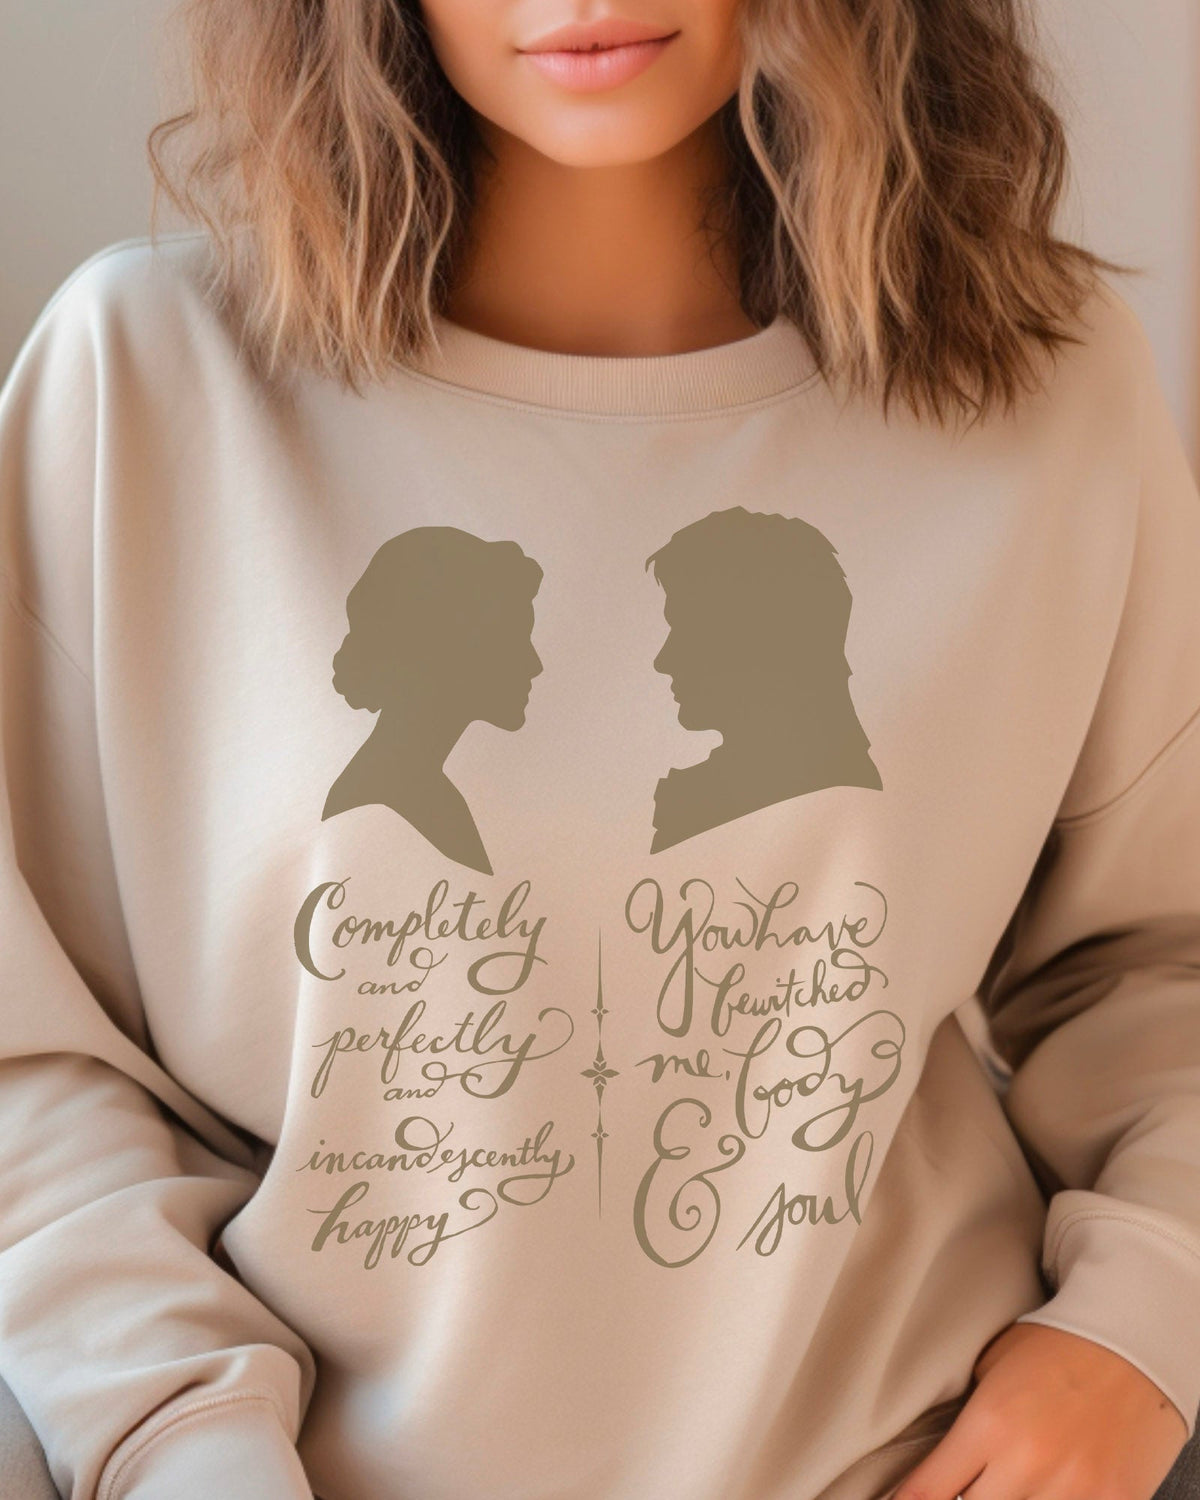 Mr. and Mrs. Darcy Sweatshirt